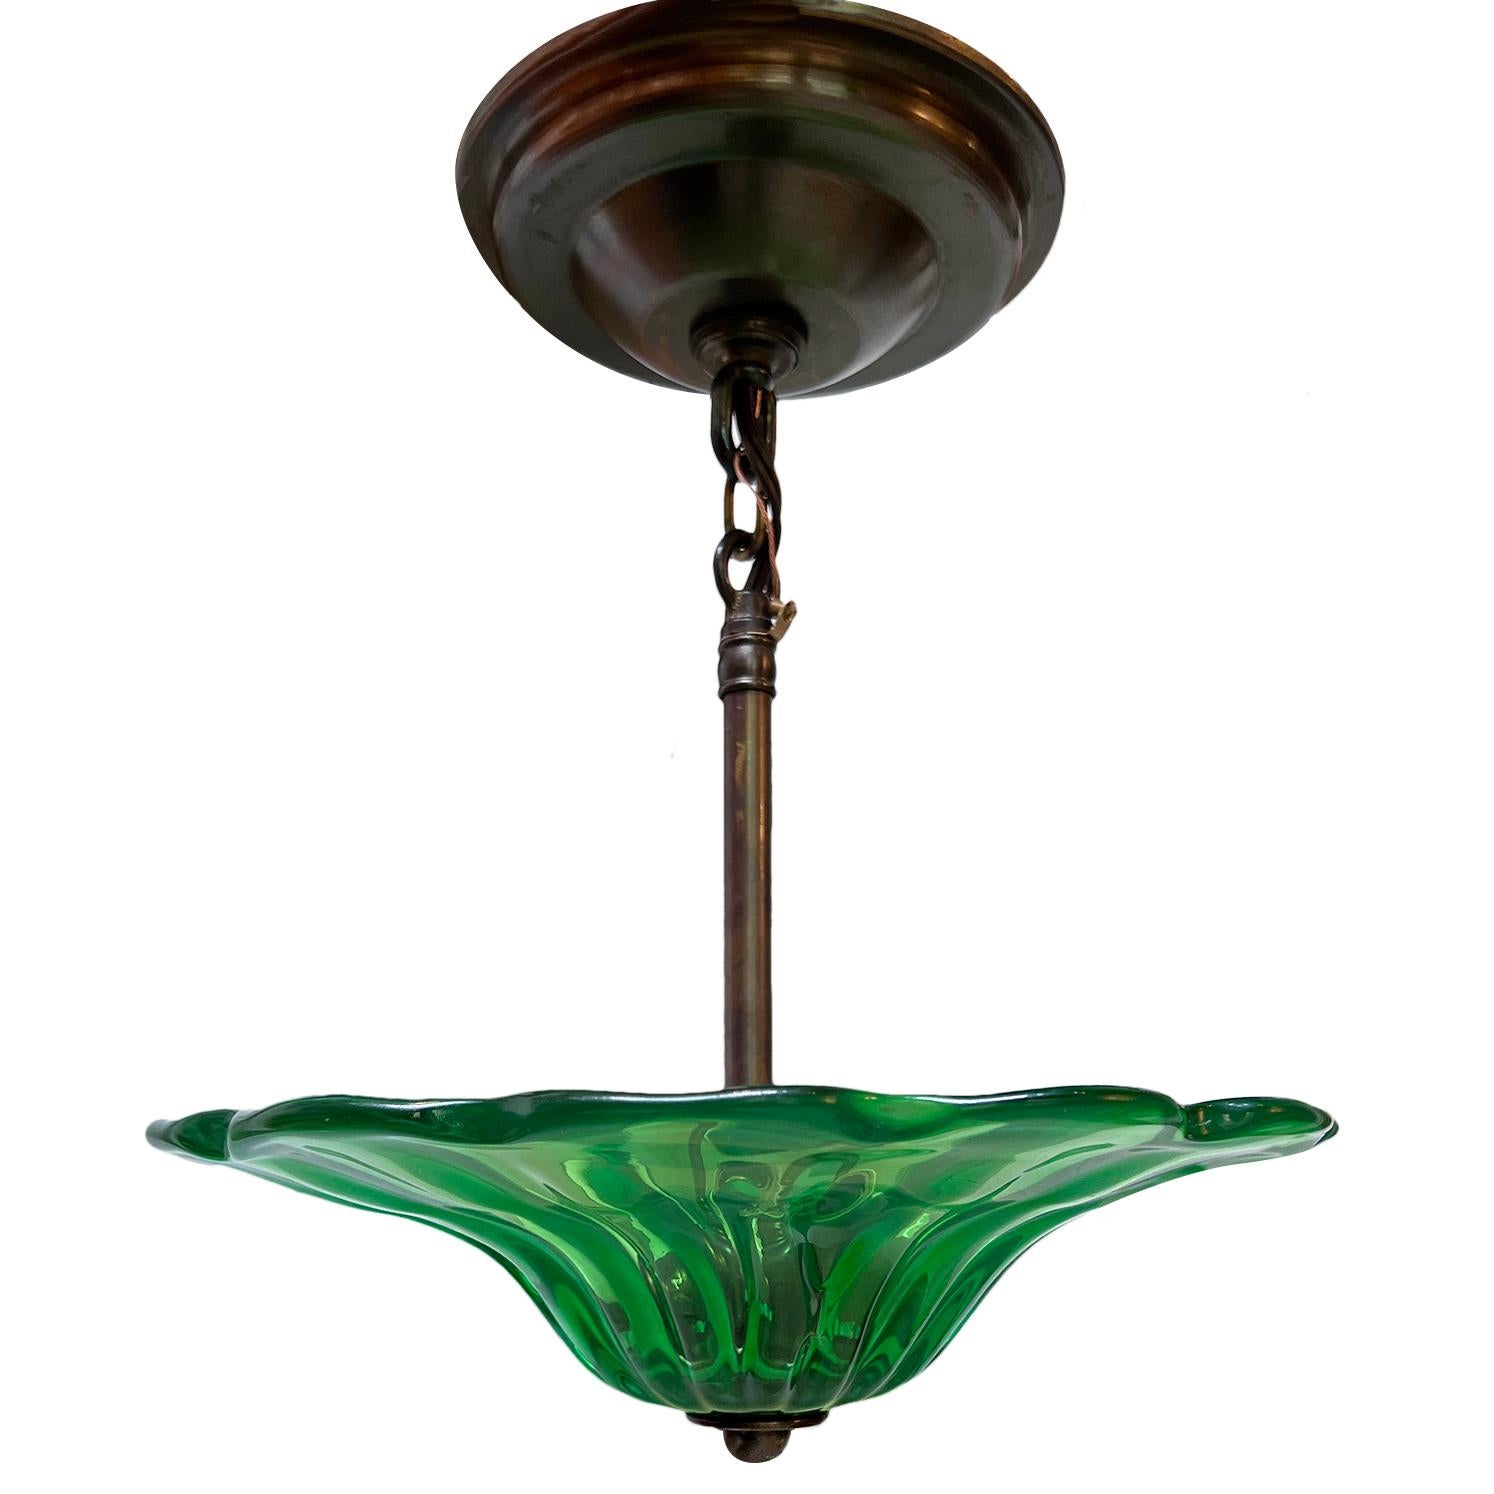 A set of three circa 1930's blown emerald green Murano glass light fixtures with 3 candelabras interior lights.

Measurements:
Diameter: 10.75